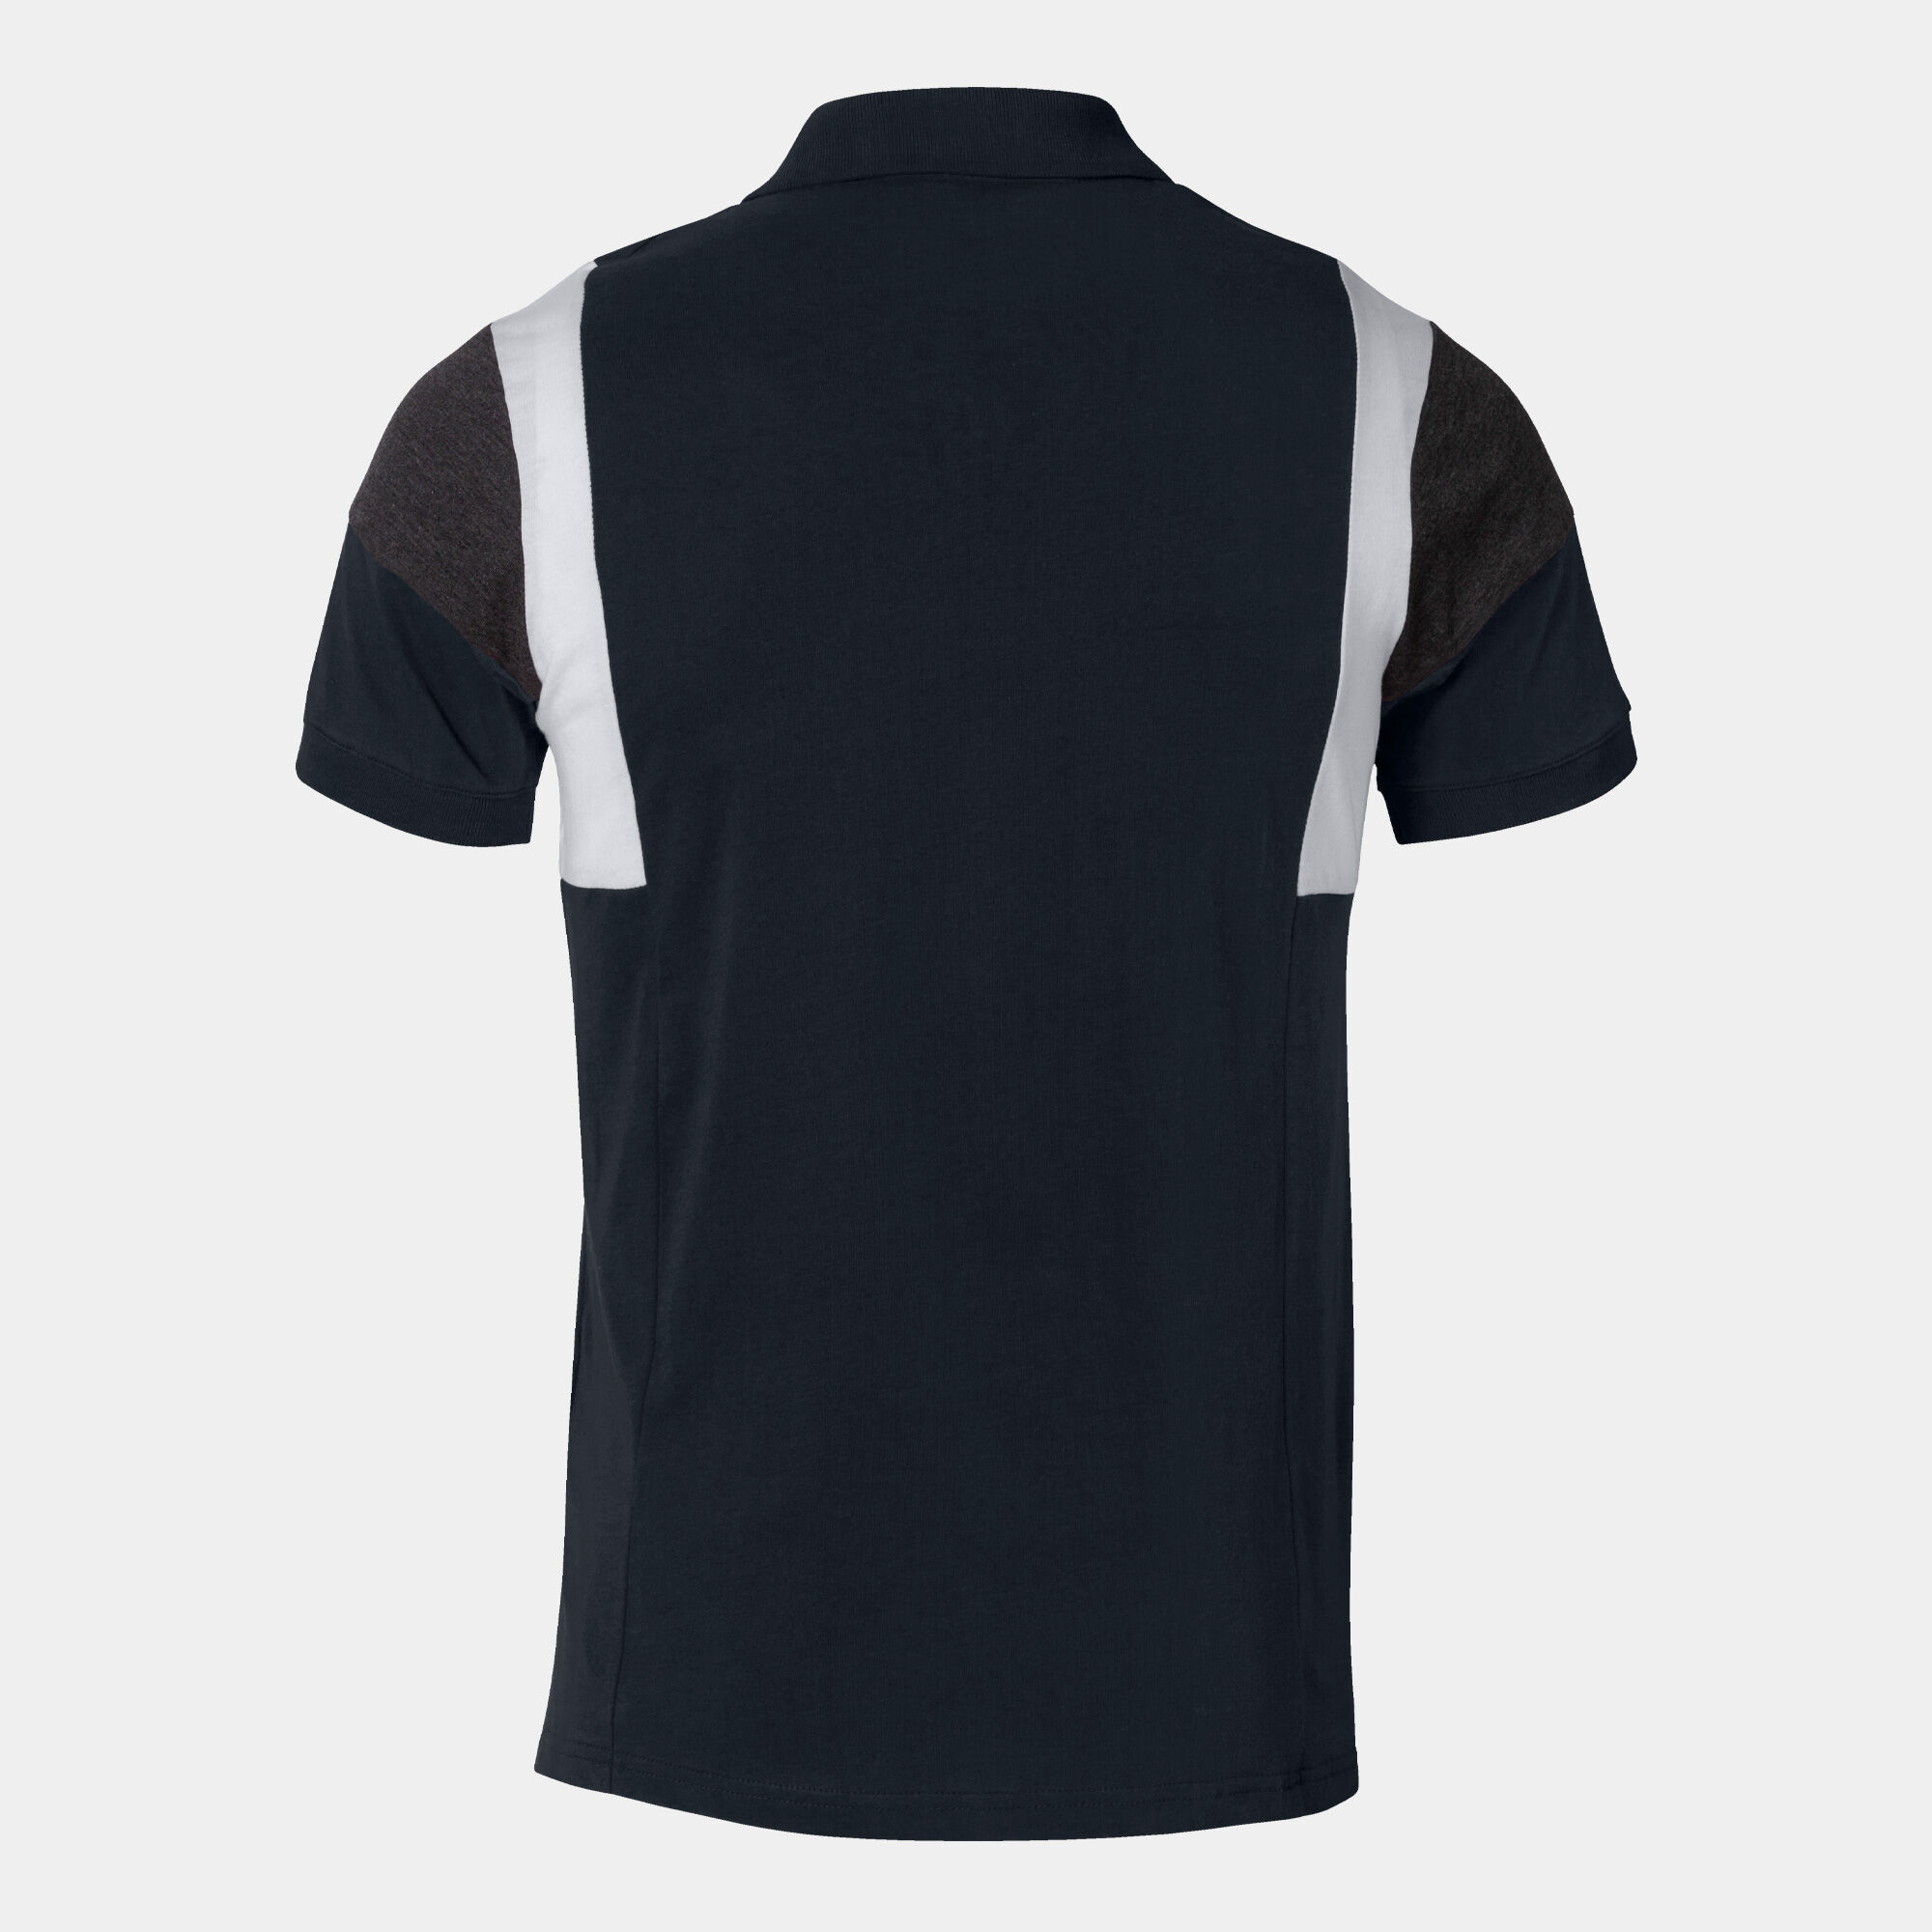 Polo shirt short-sleeve man Confort III black